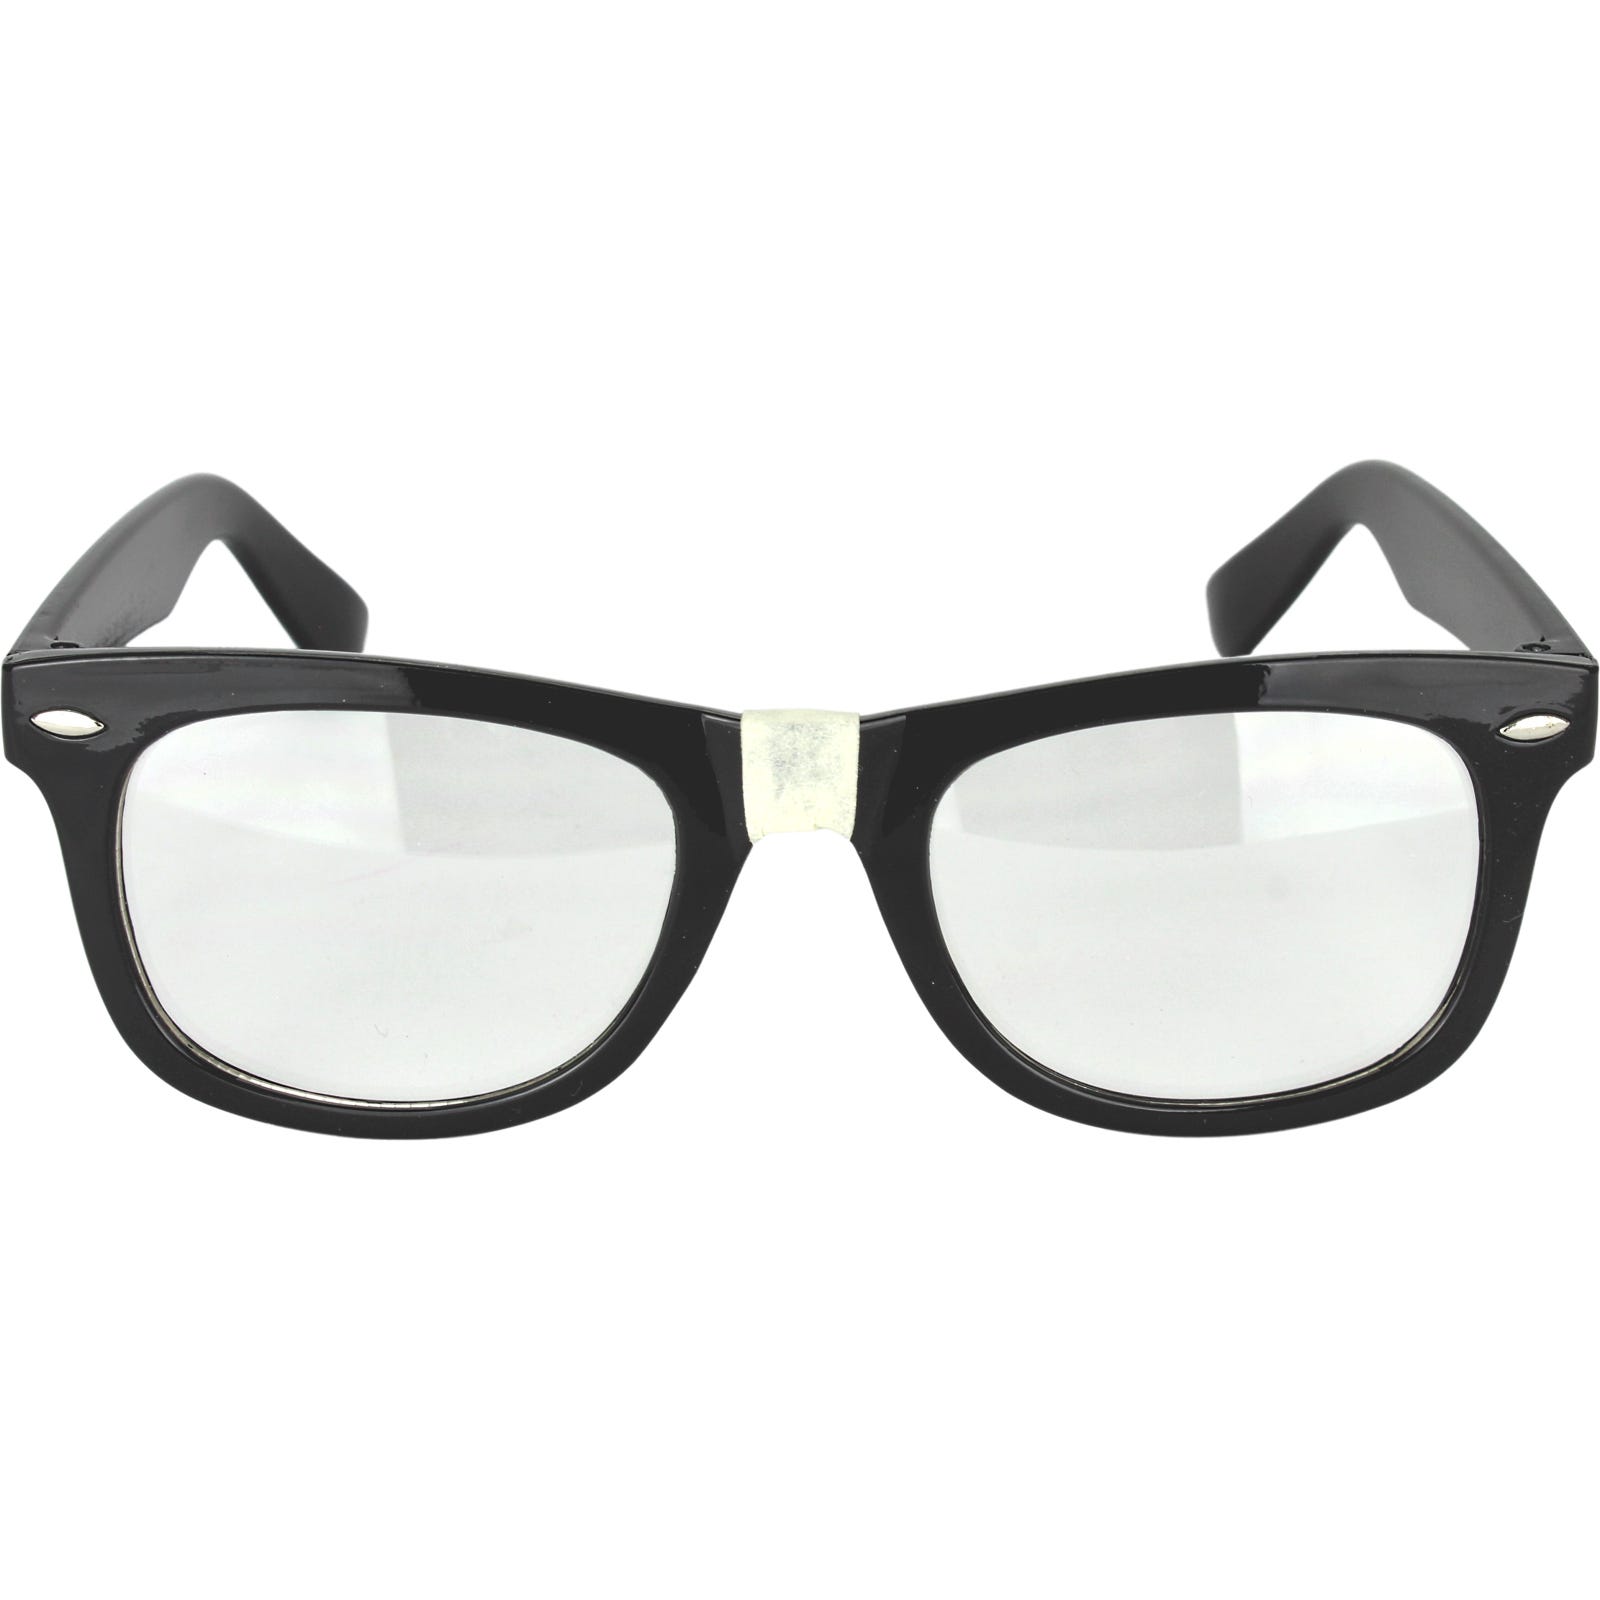 80s nerd glasses